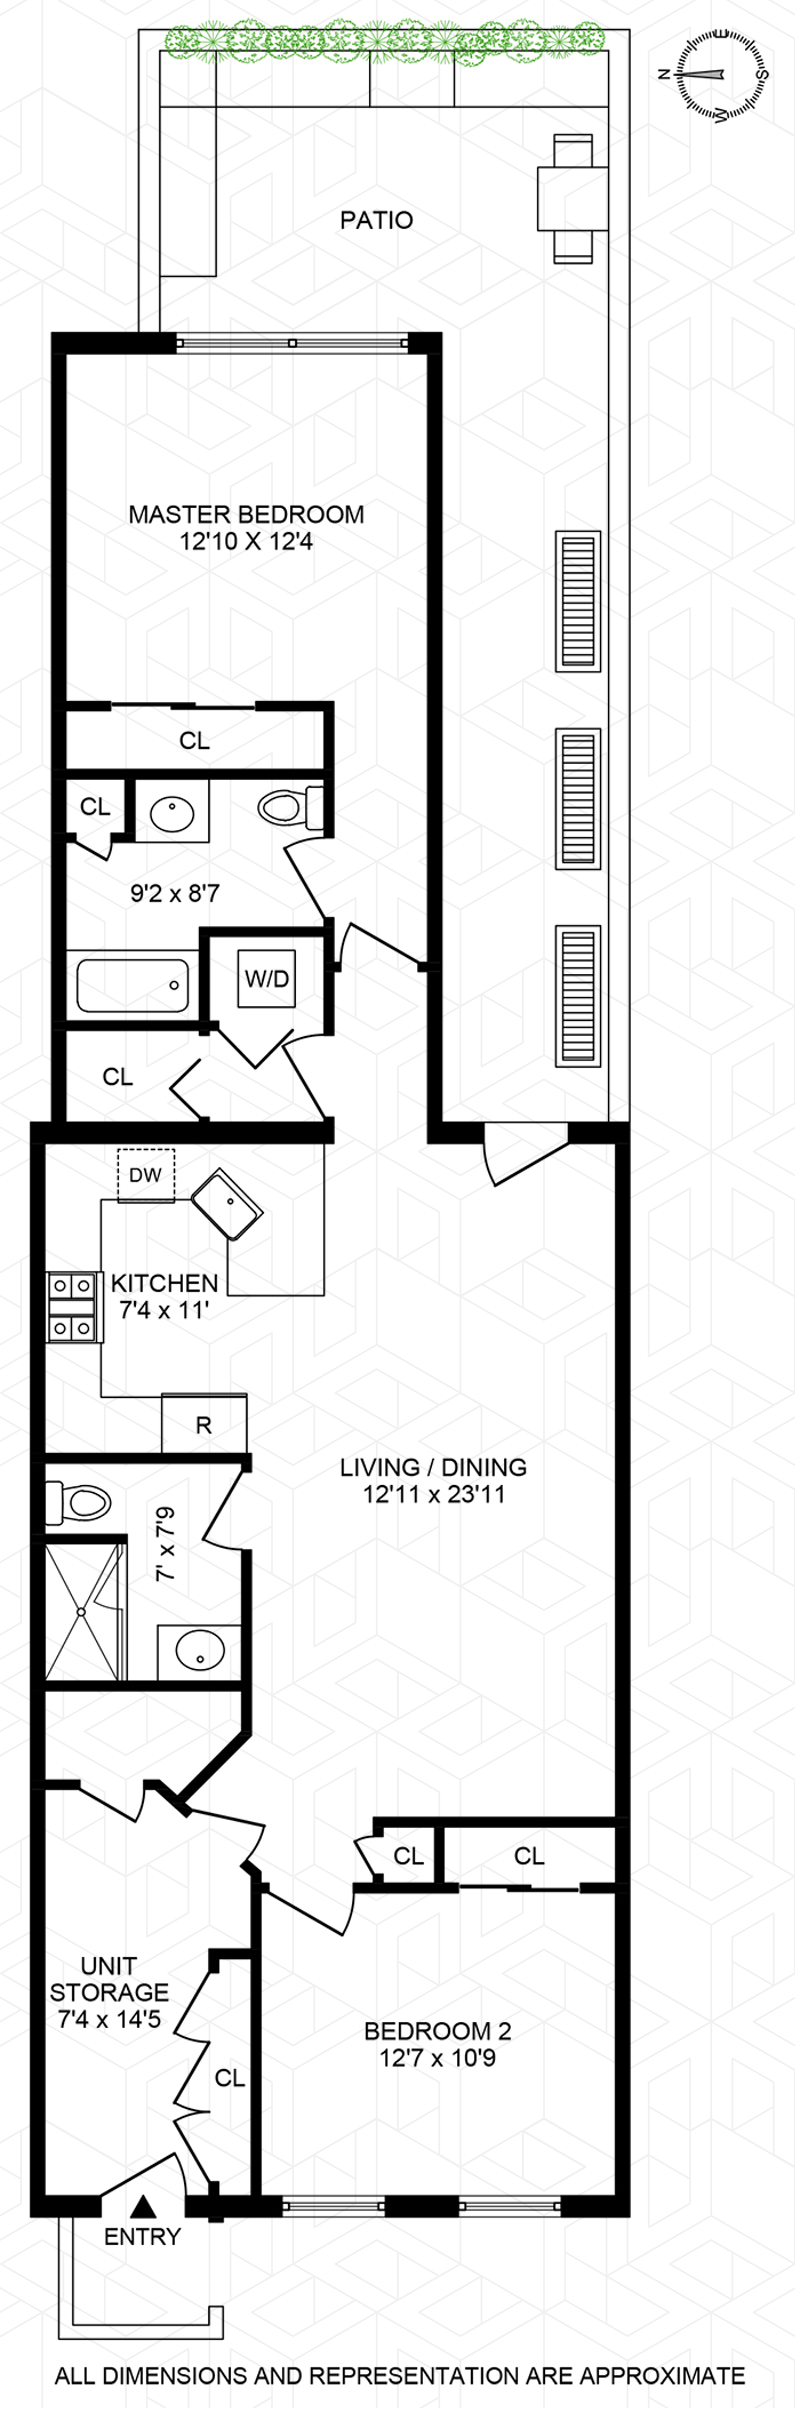 Floorplan for 727 Garden St